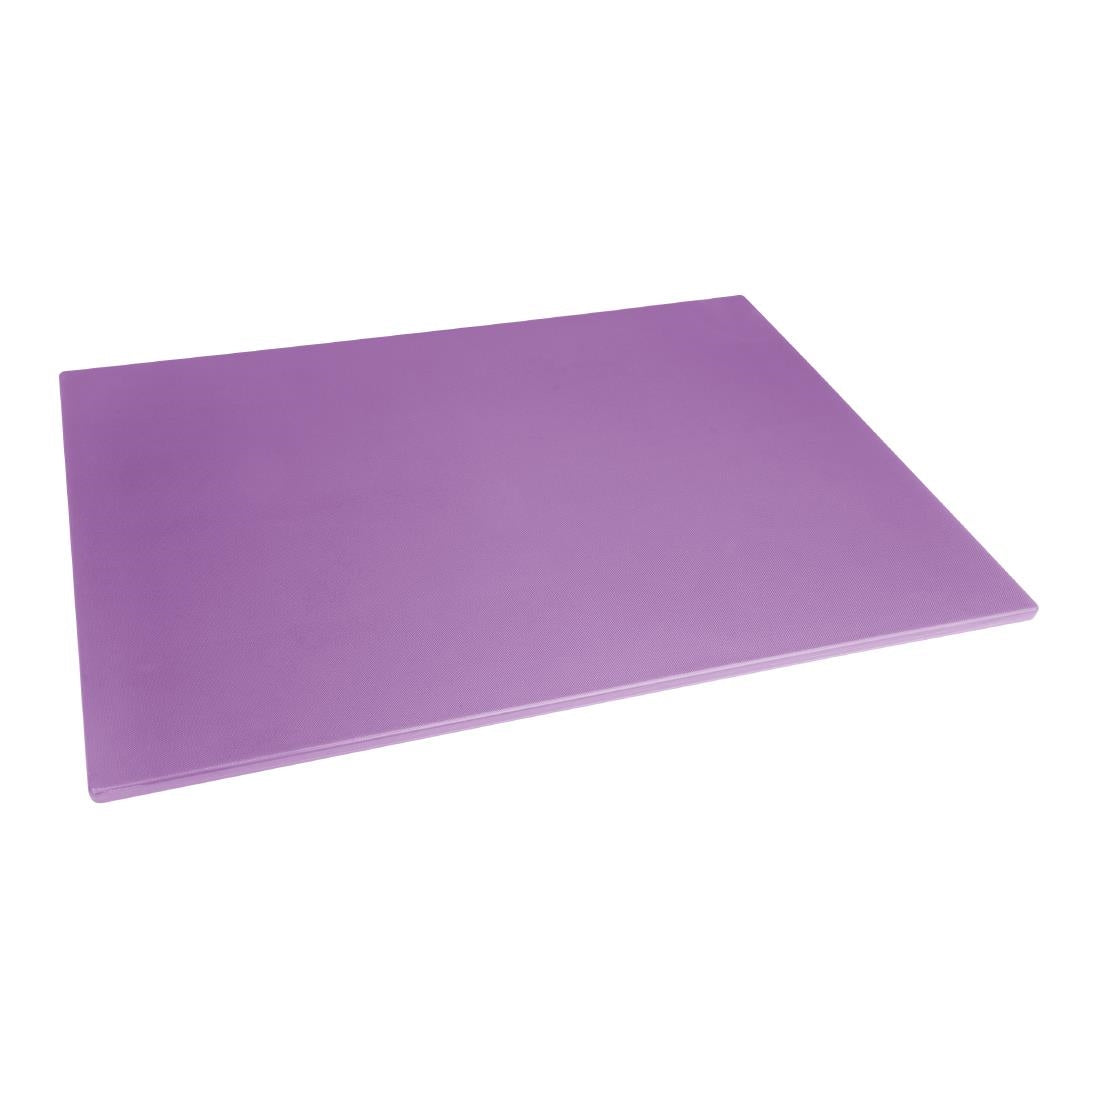 FX108 Hygiplas Low Density Chopping Board Purple - 600x450x10mm JD Catering Equipment Solutions Ltd